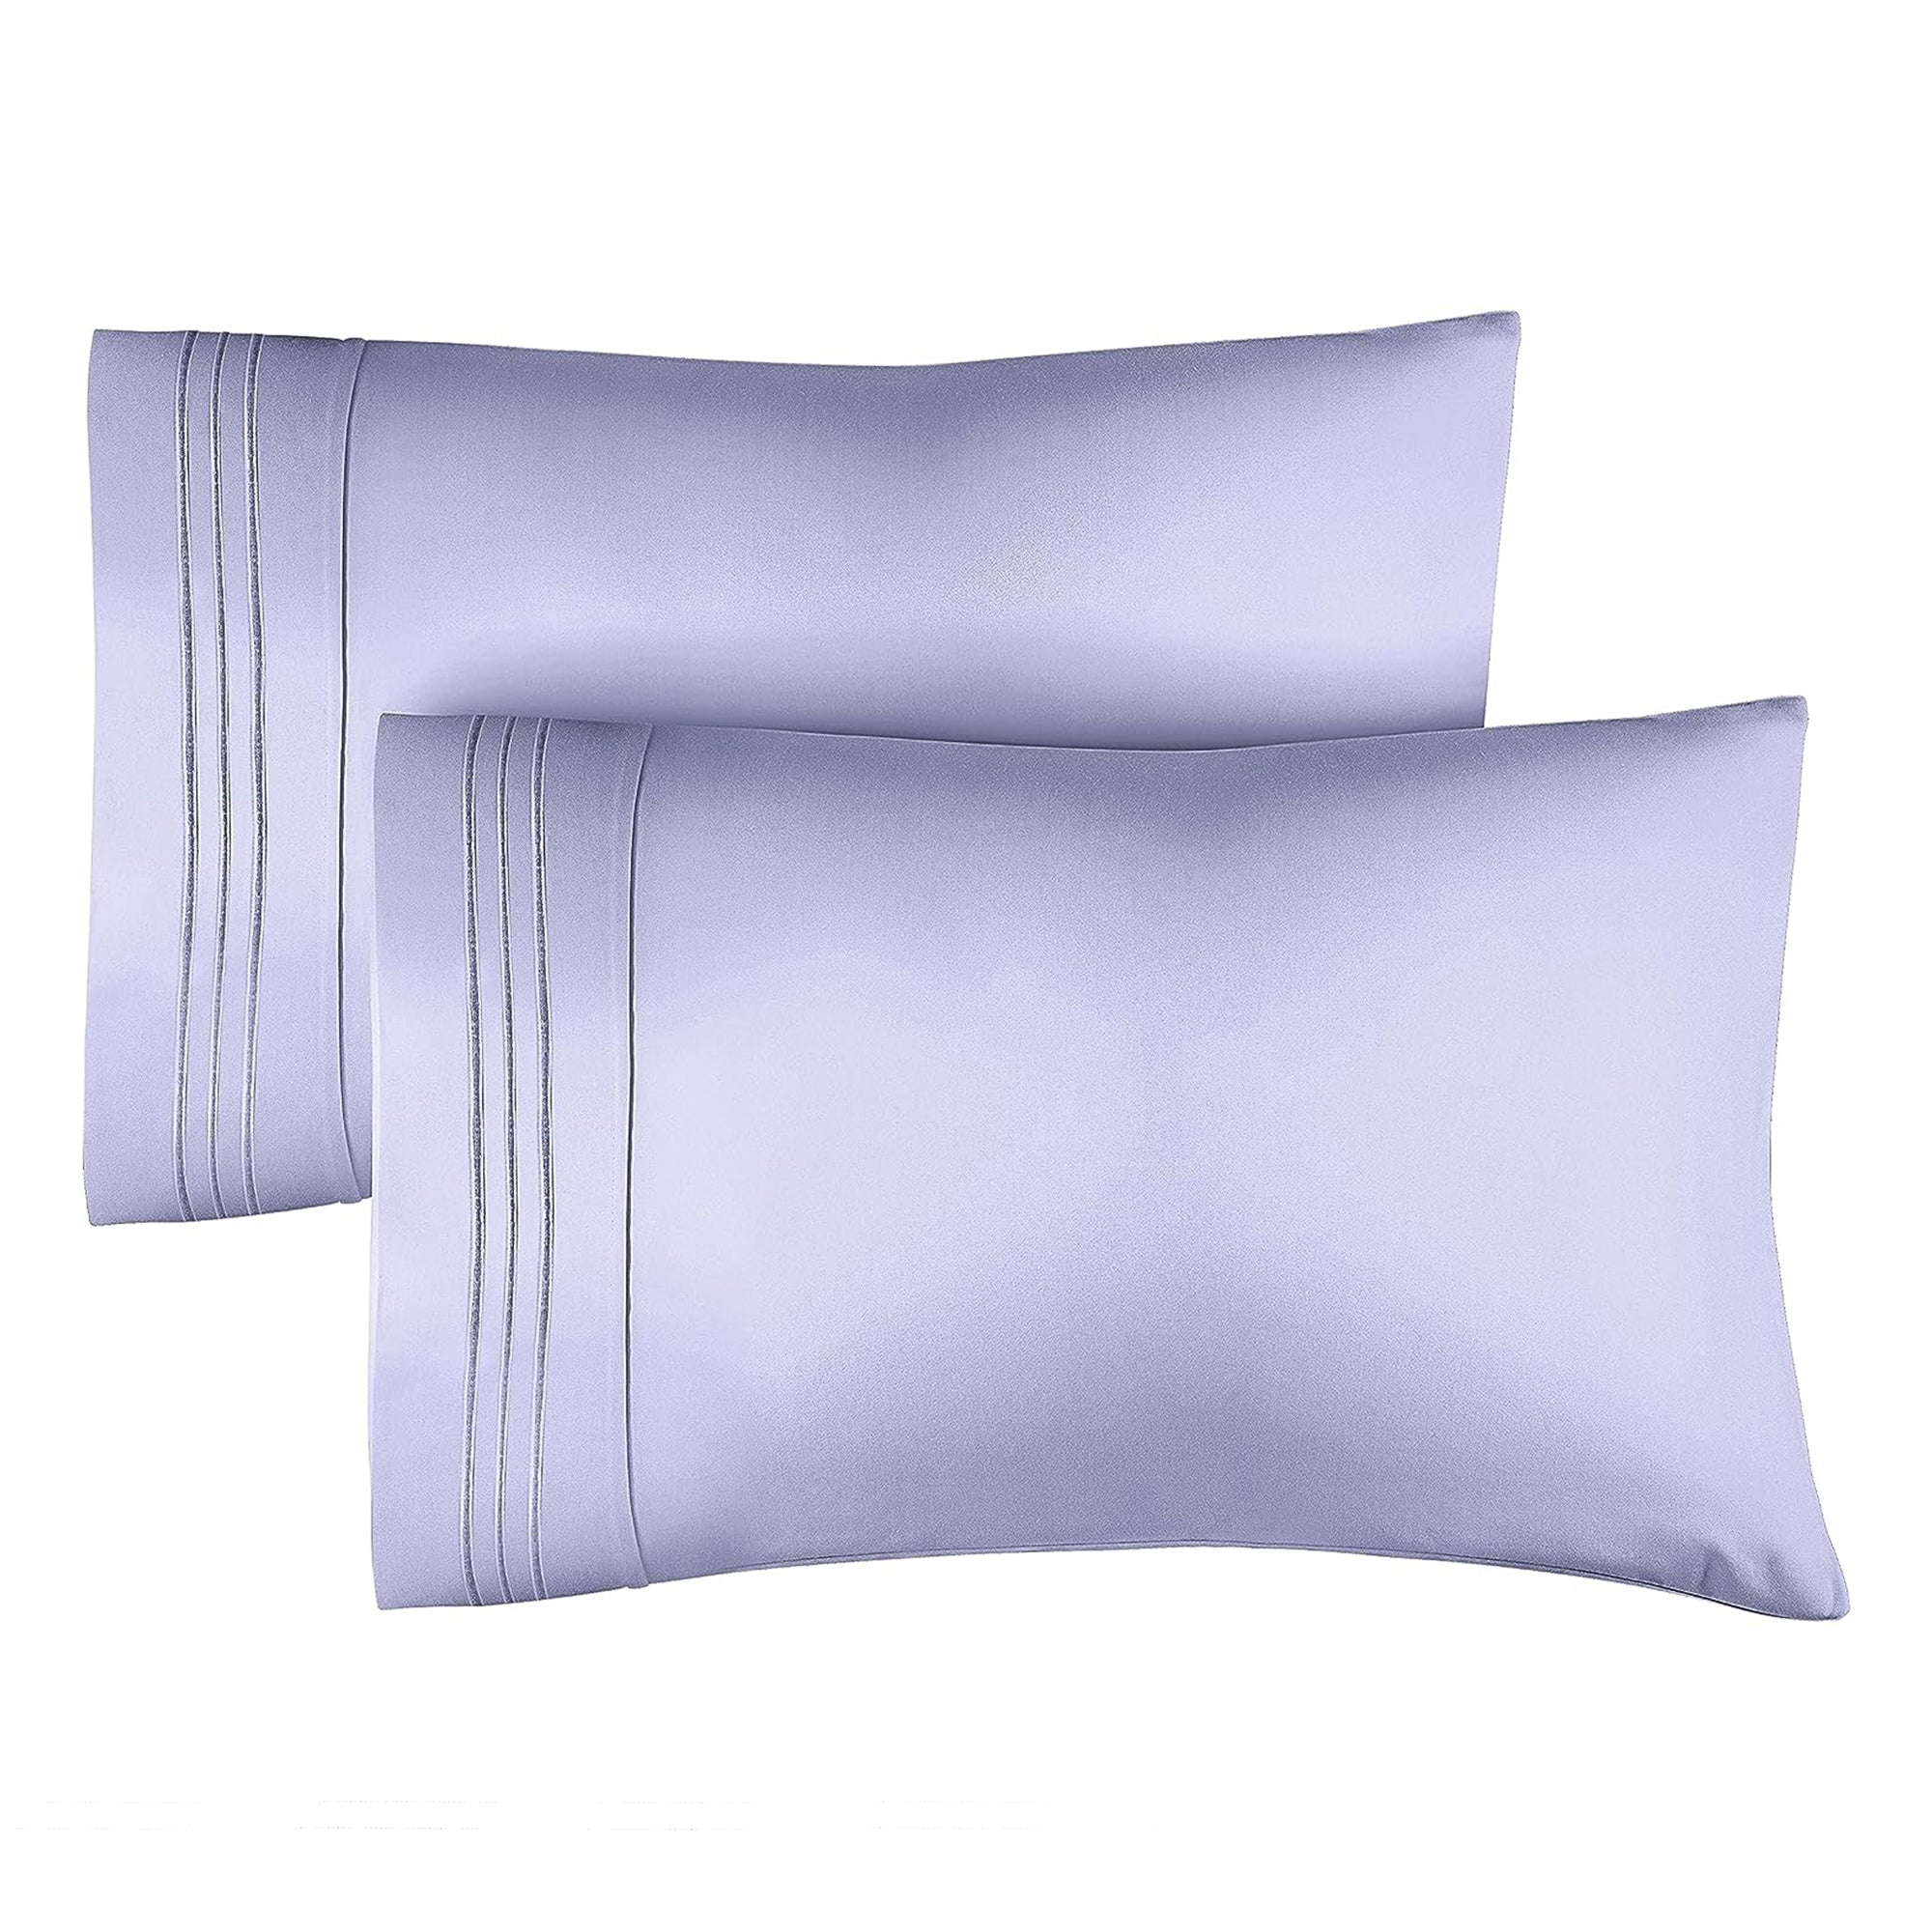 tes 2 Pillowcase Set - Lavender